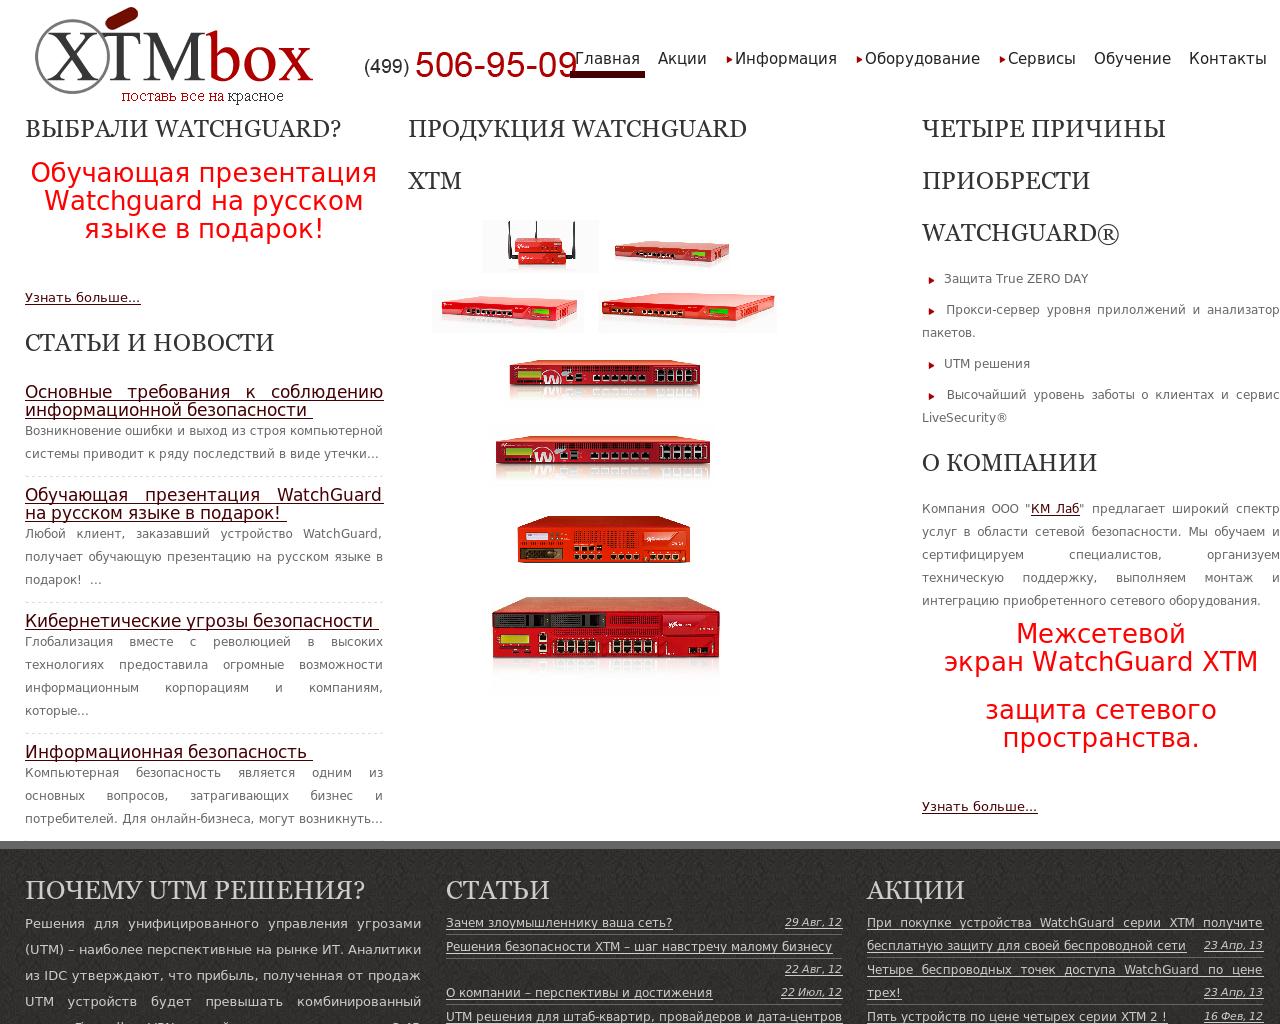 Изображение сайта xtmbox.ru в разрешении 1280x1024